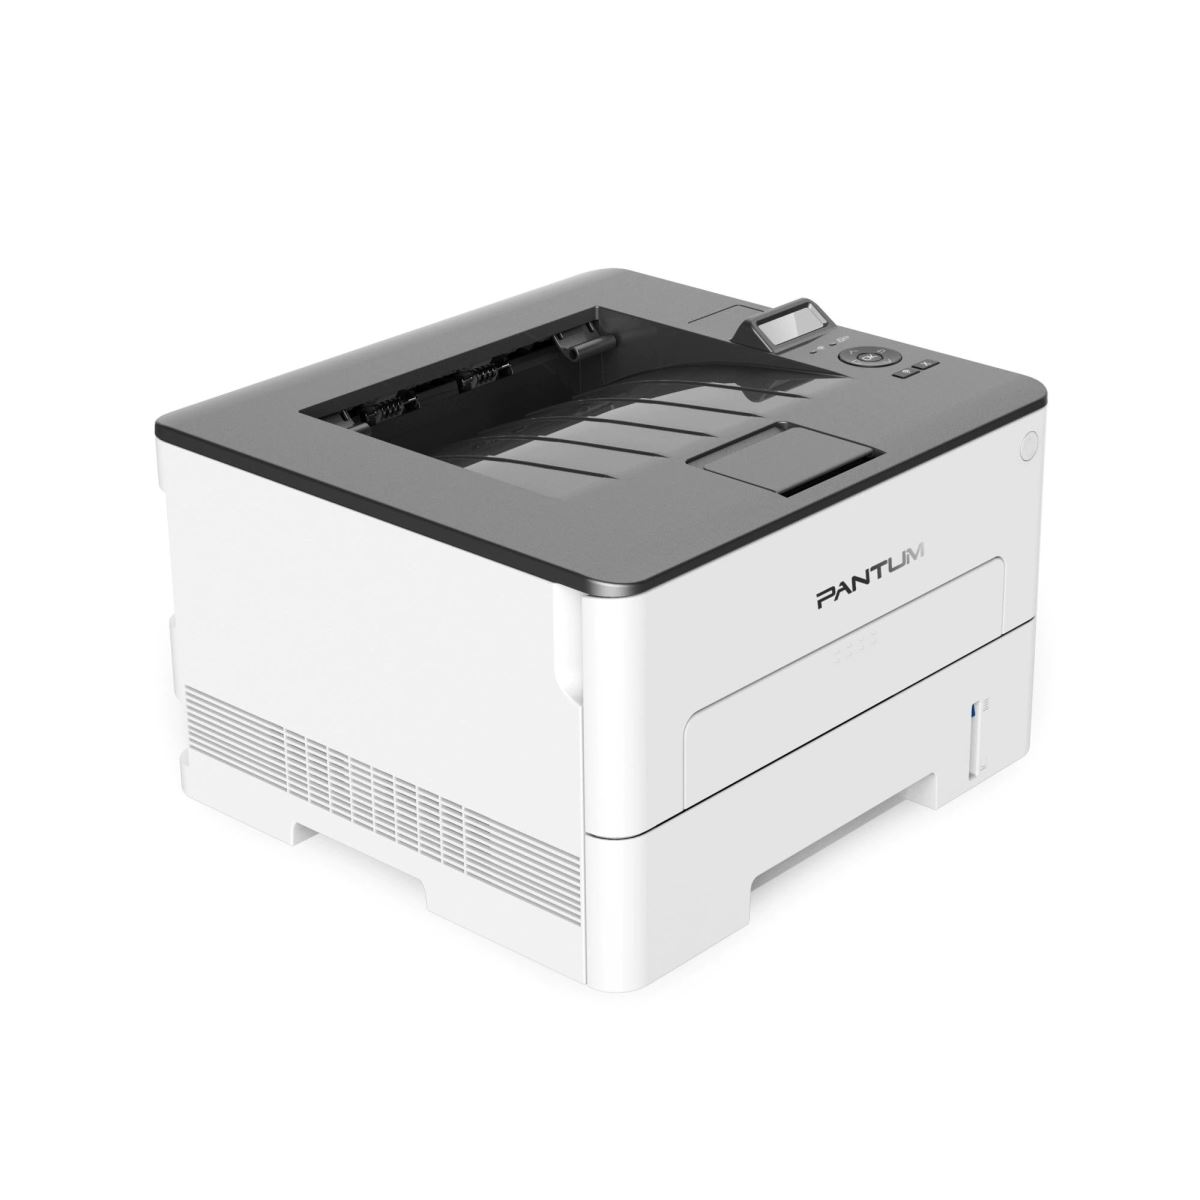 Imprimanta Pantum P3010DW, laser monocrom, A4, USB, Wireless